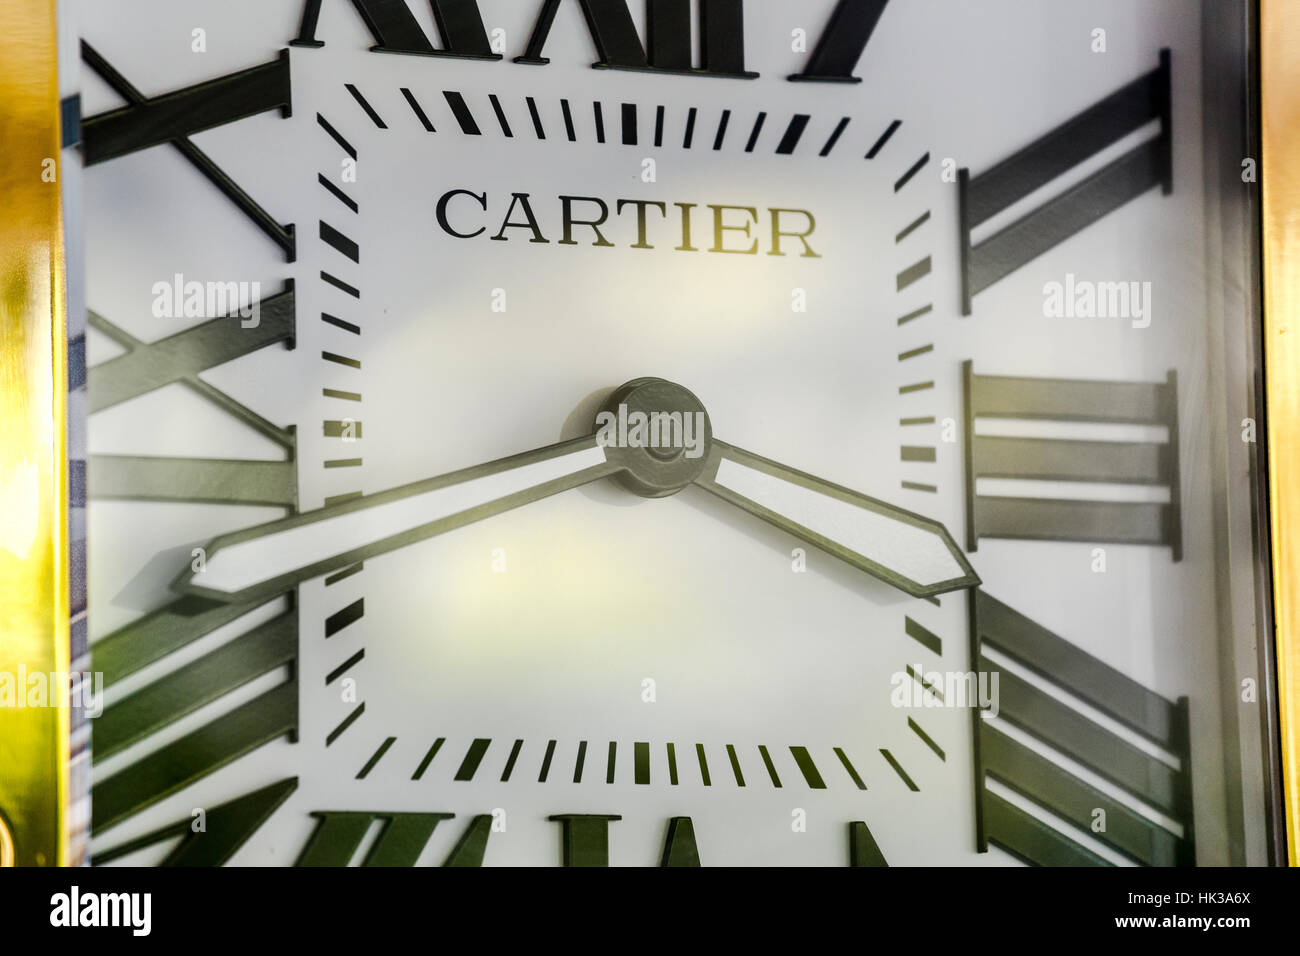 cartier square clock